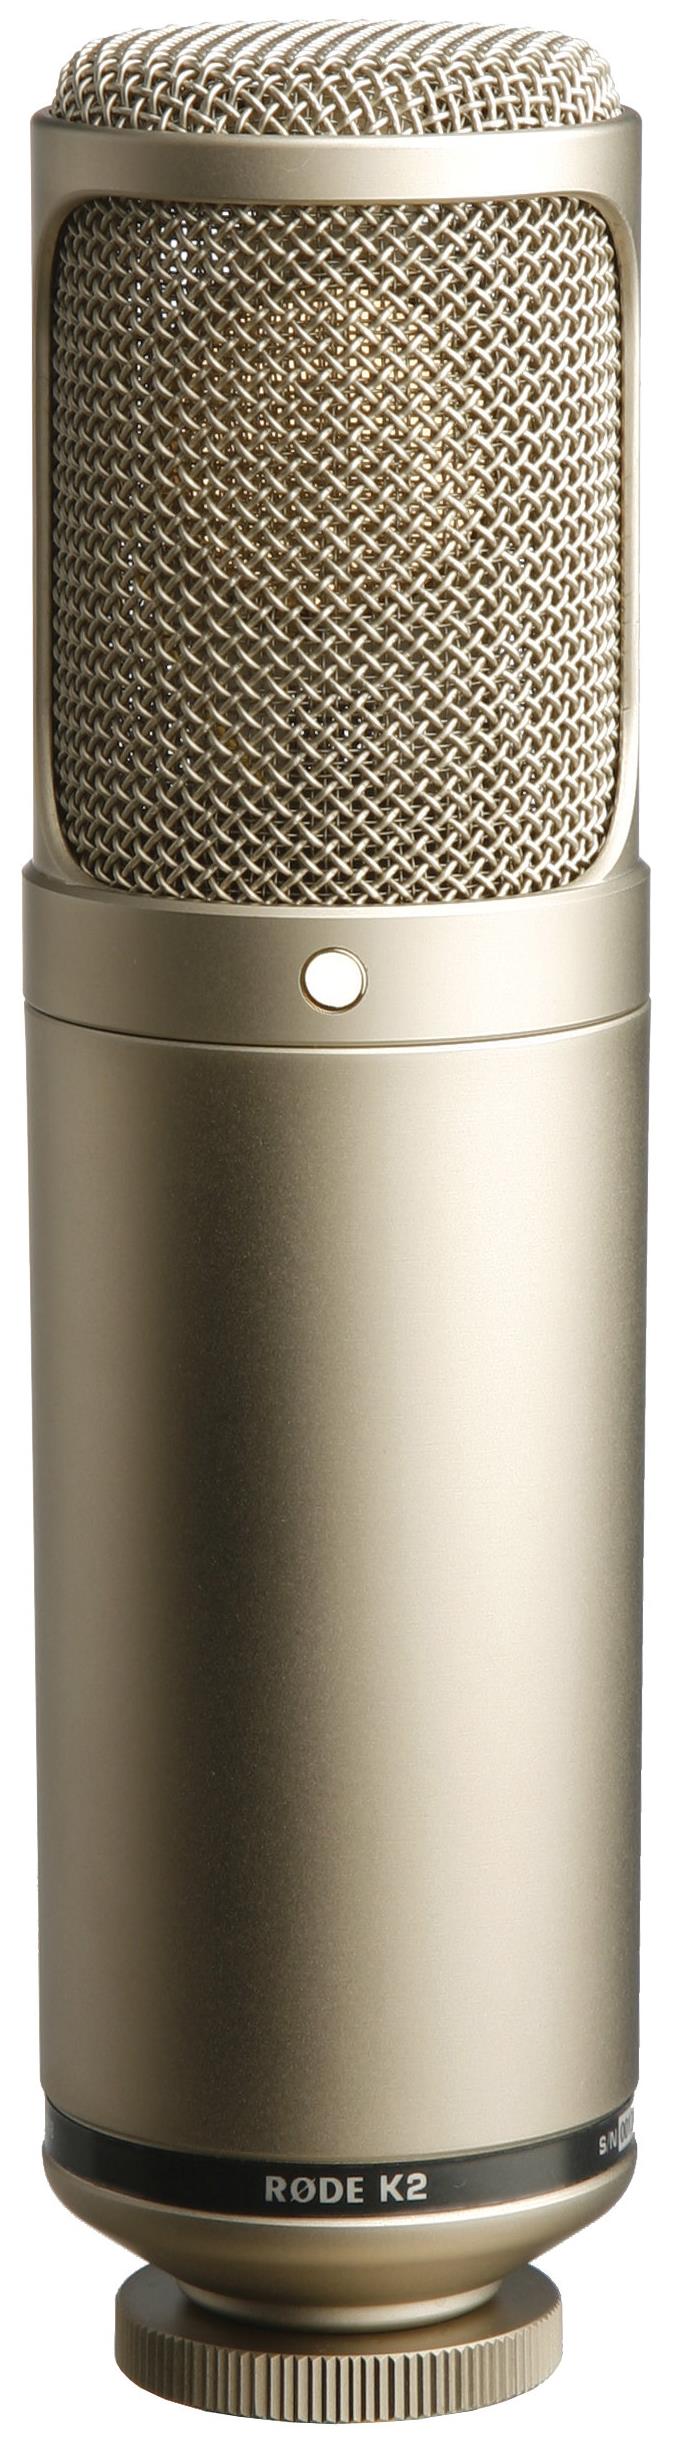 Rode K2 Tube Condenser Microphone